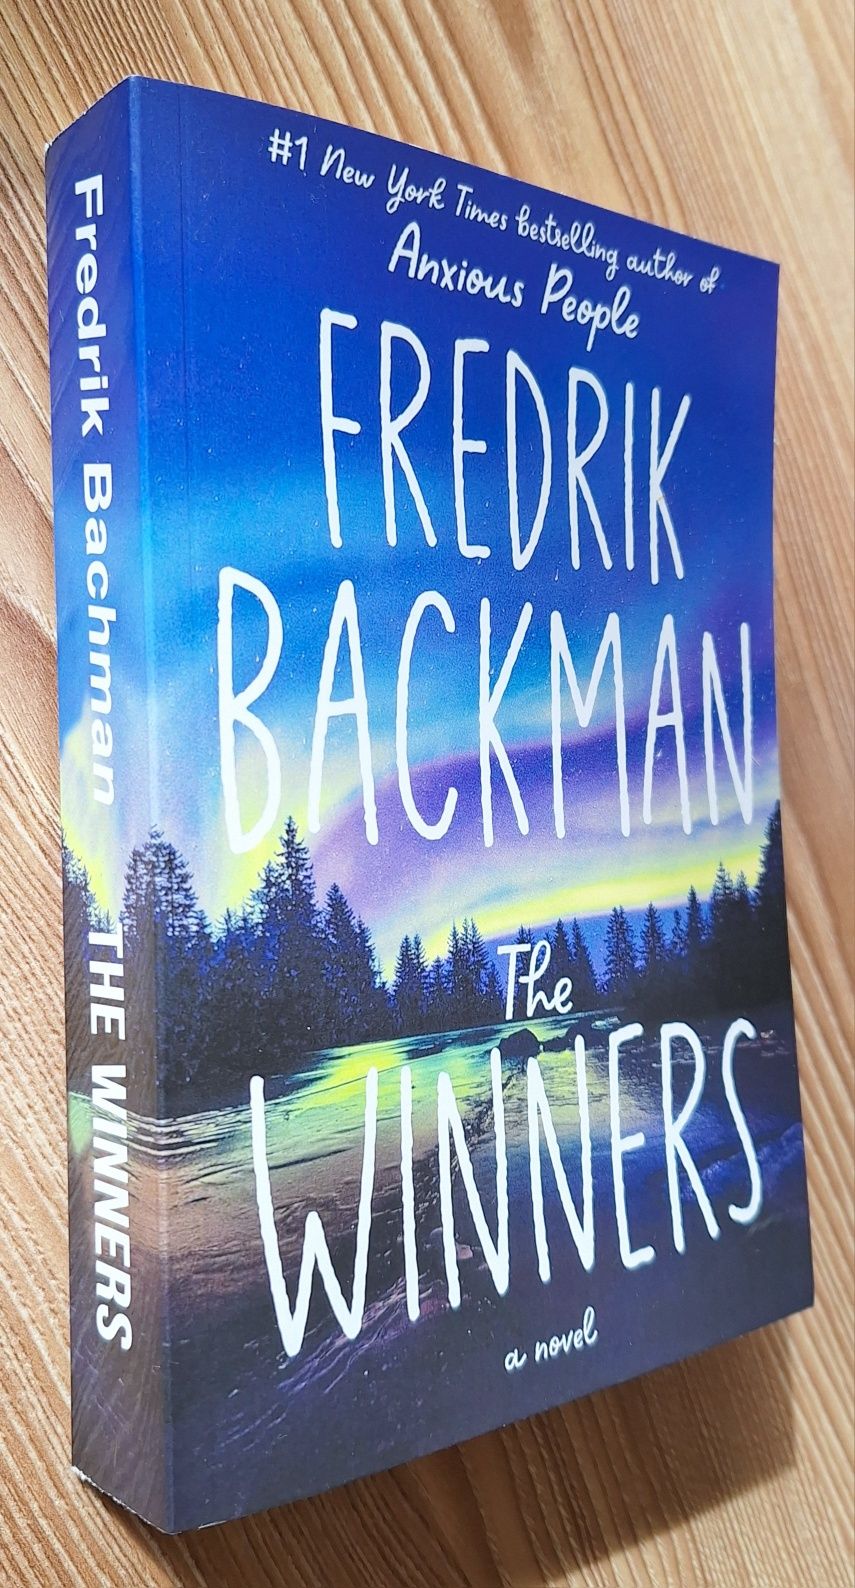 Fredrik Backman "BEARTOWN" / "THE WINNERS"